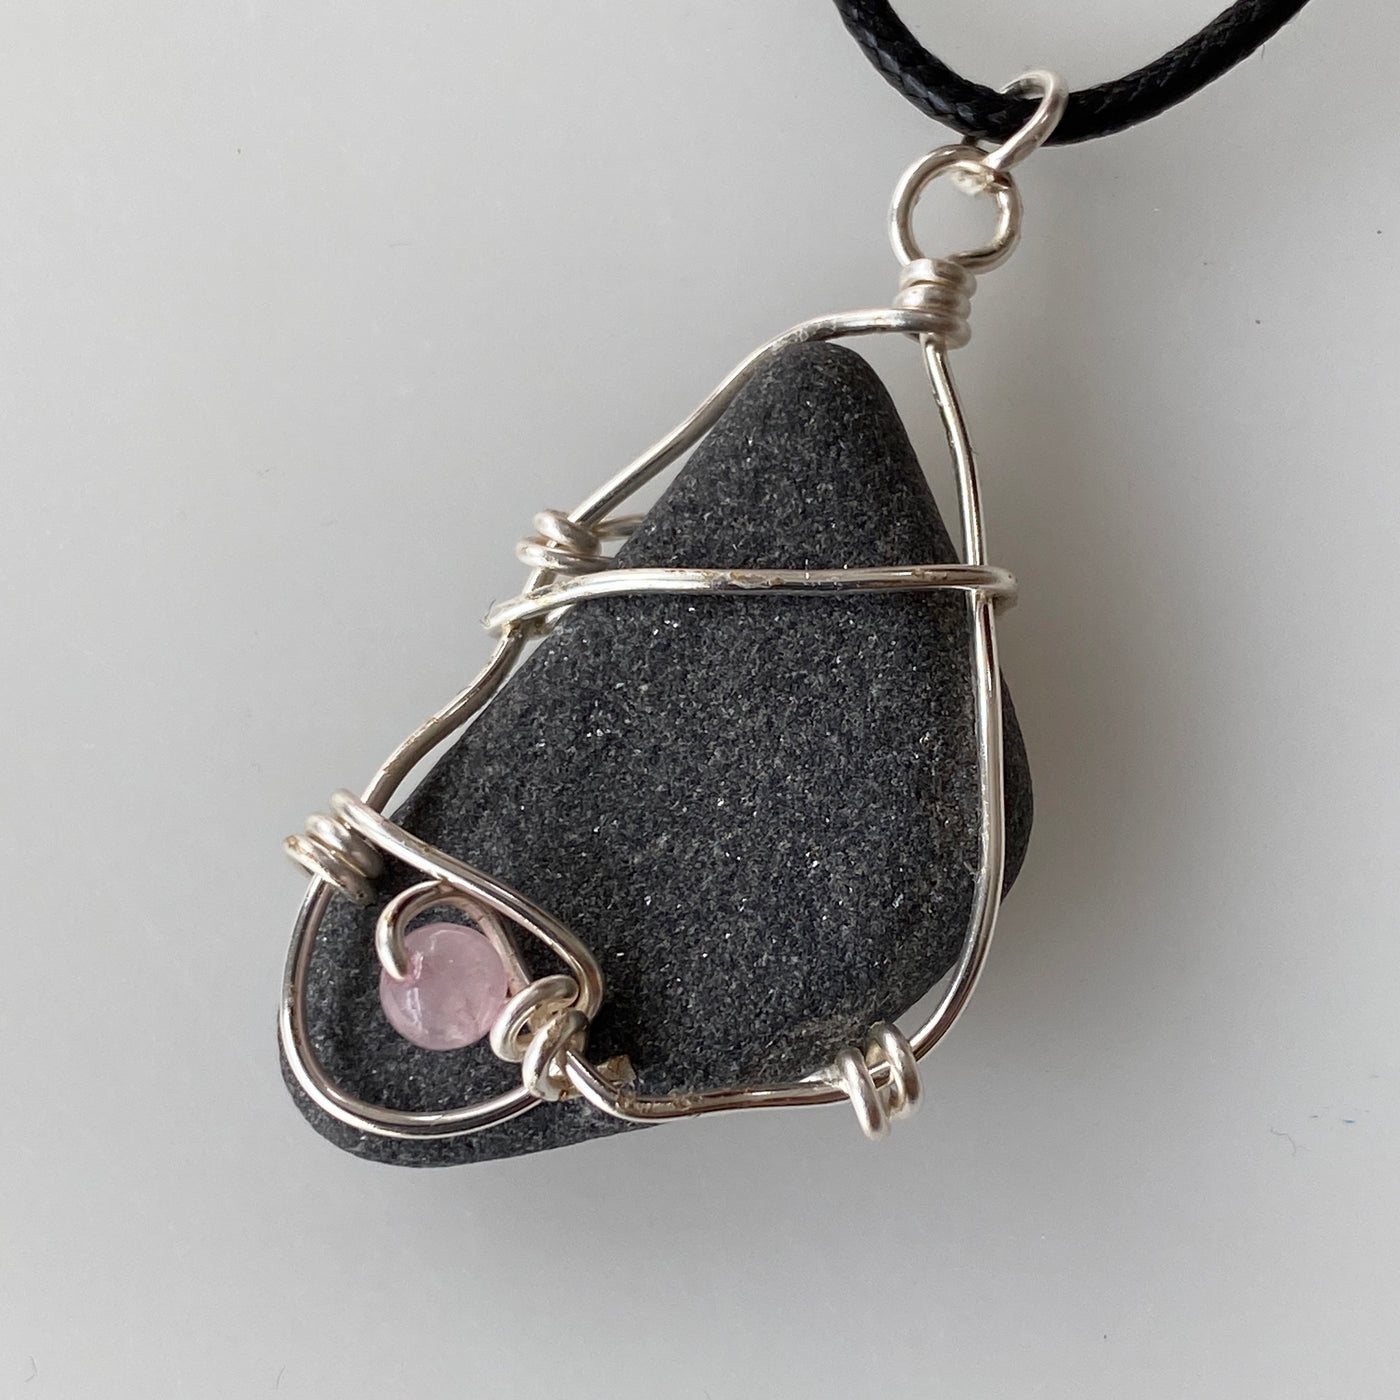 Grey natural stone, pink quartz and silver wire small pendant.